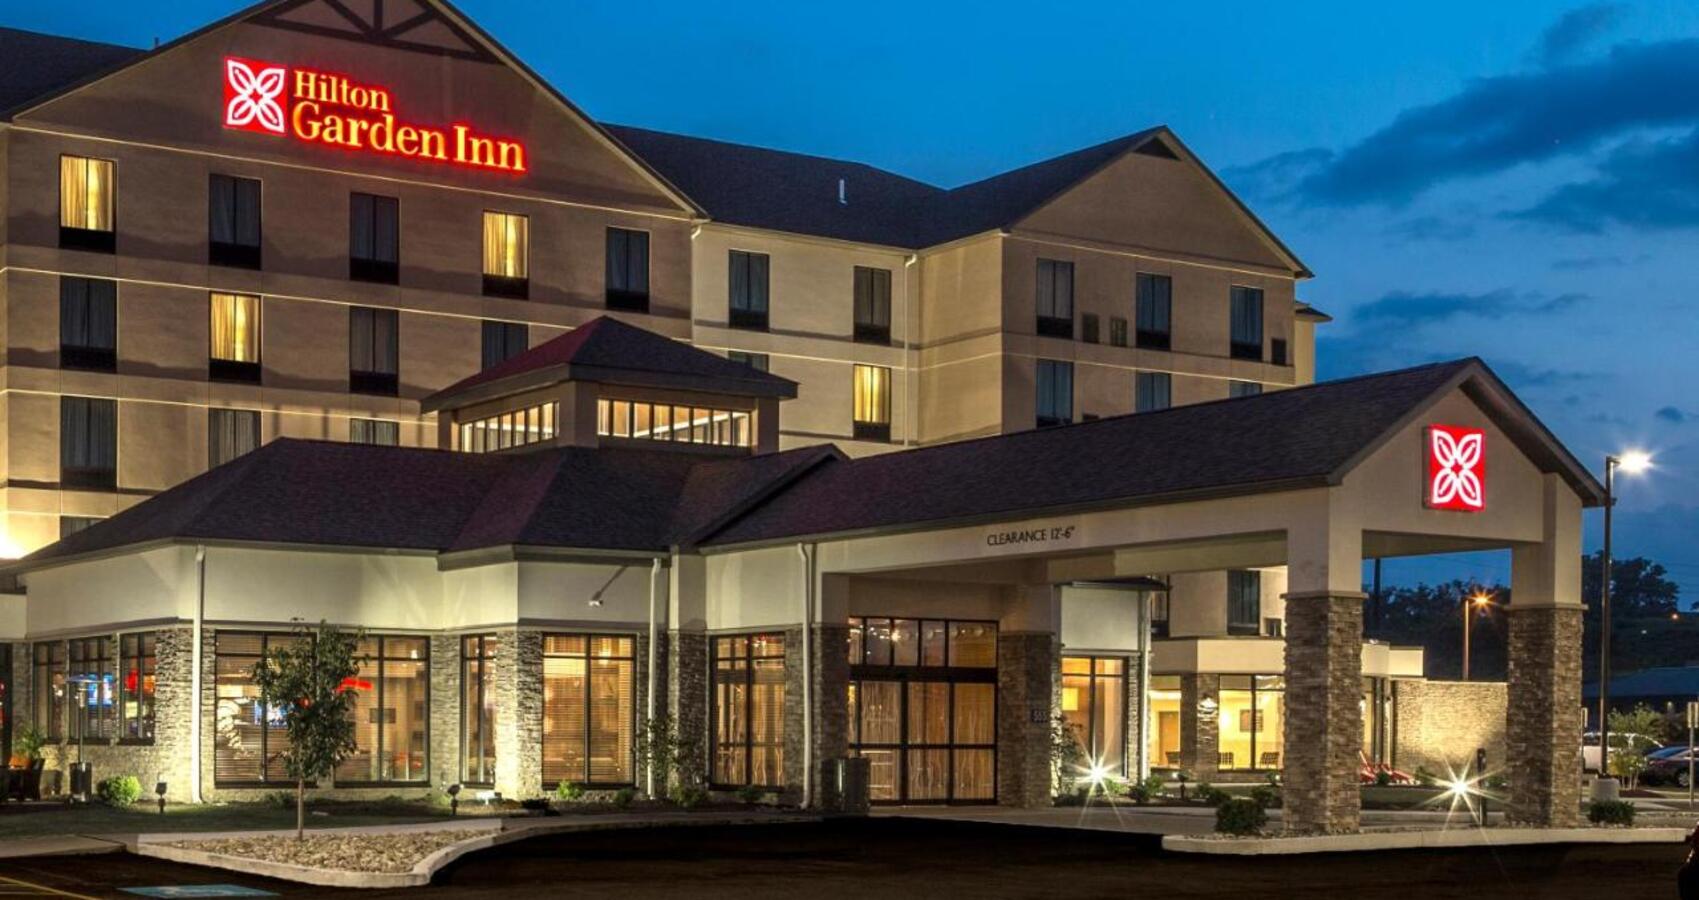 Hilton Garden Inn Uniontown Receives Multiple Awards